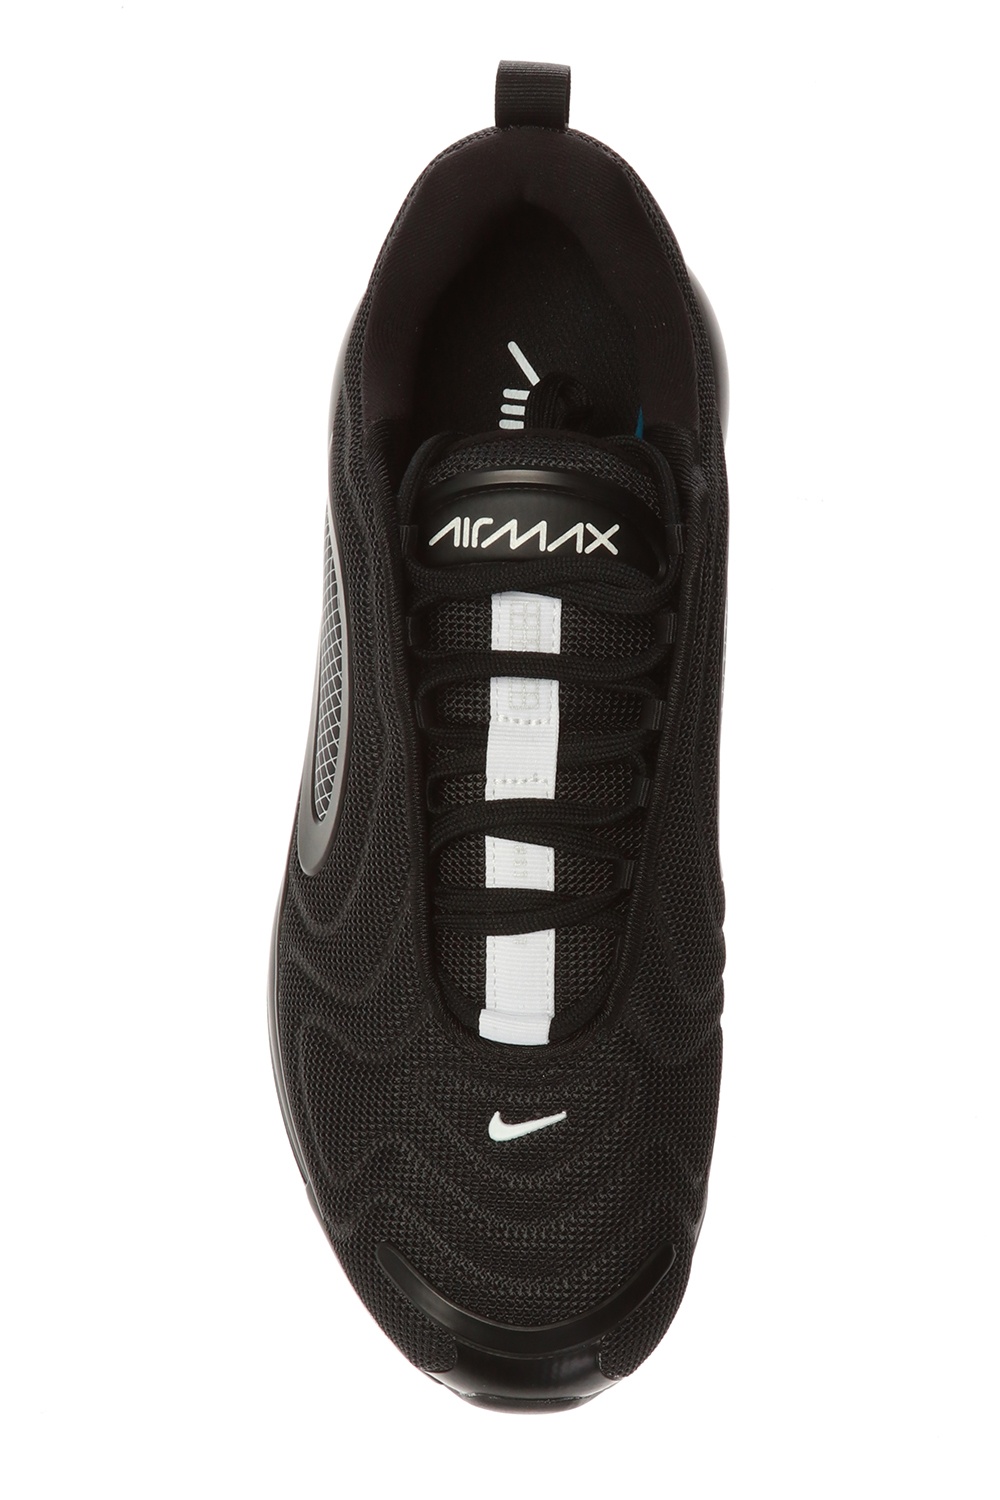 Nike Air Max 720 Black/White - CV1633-002